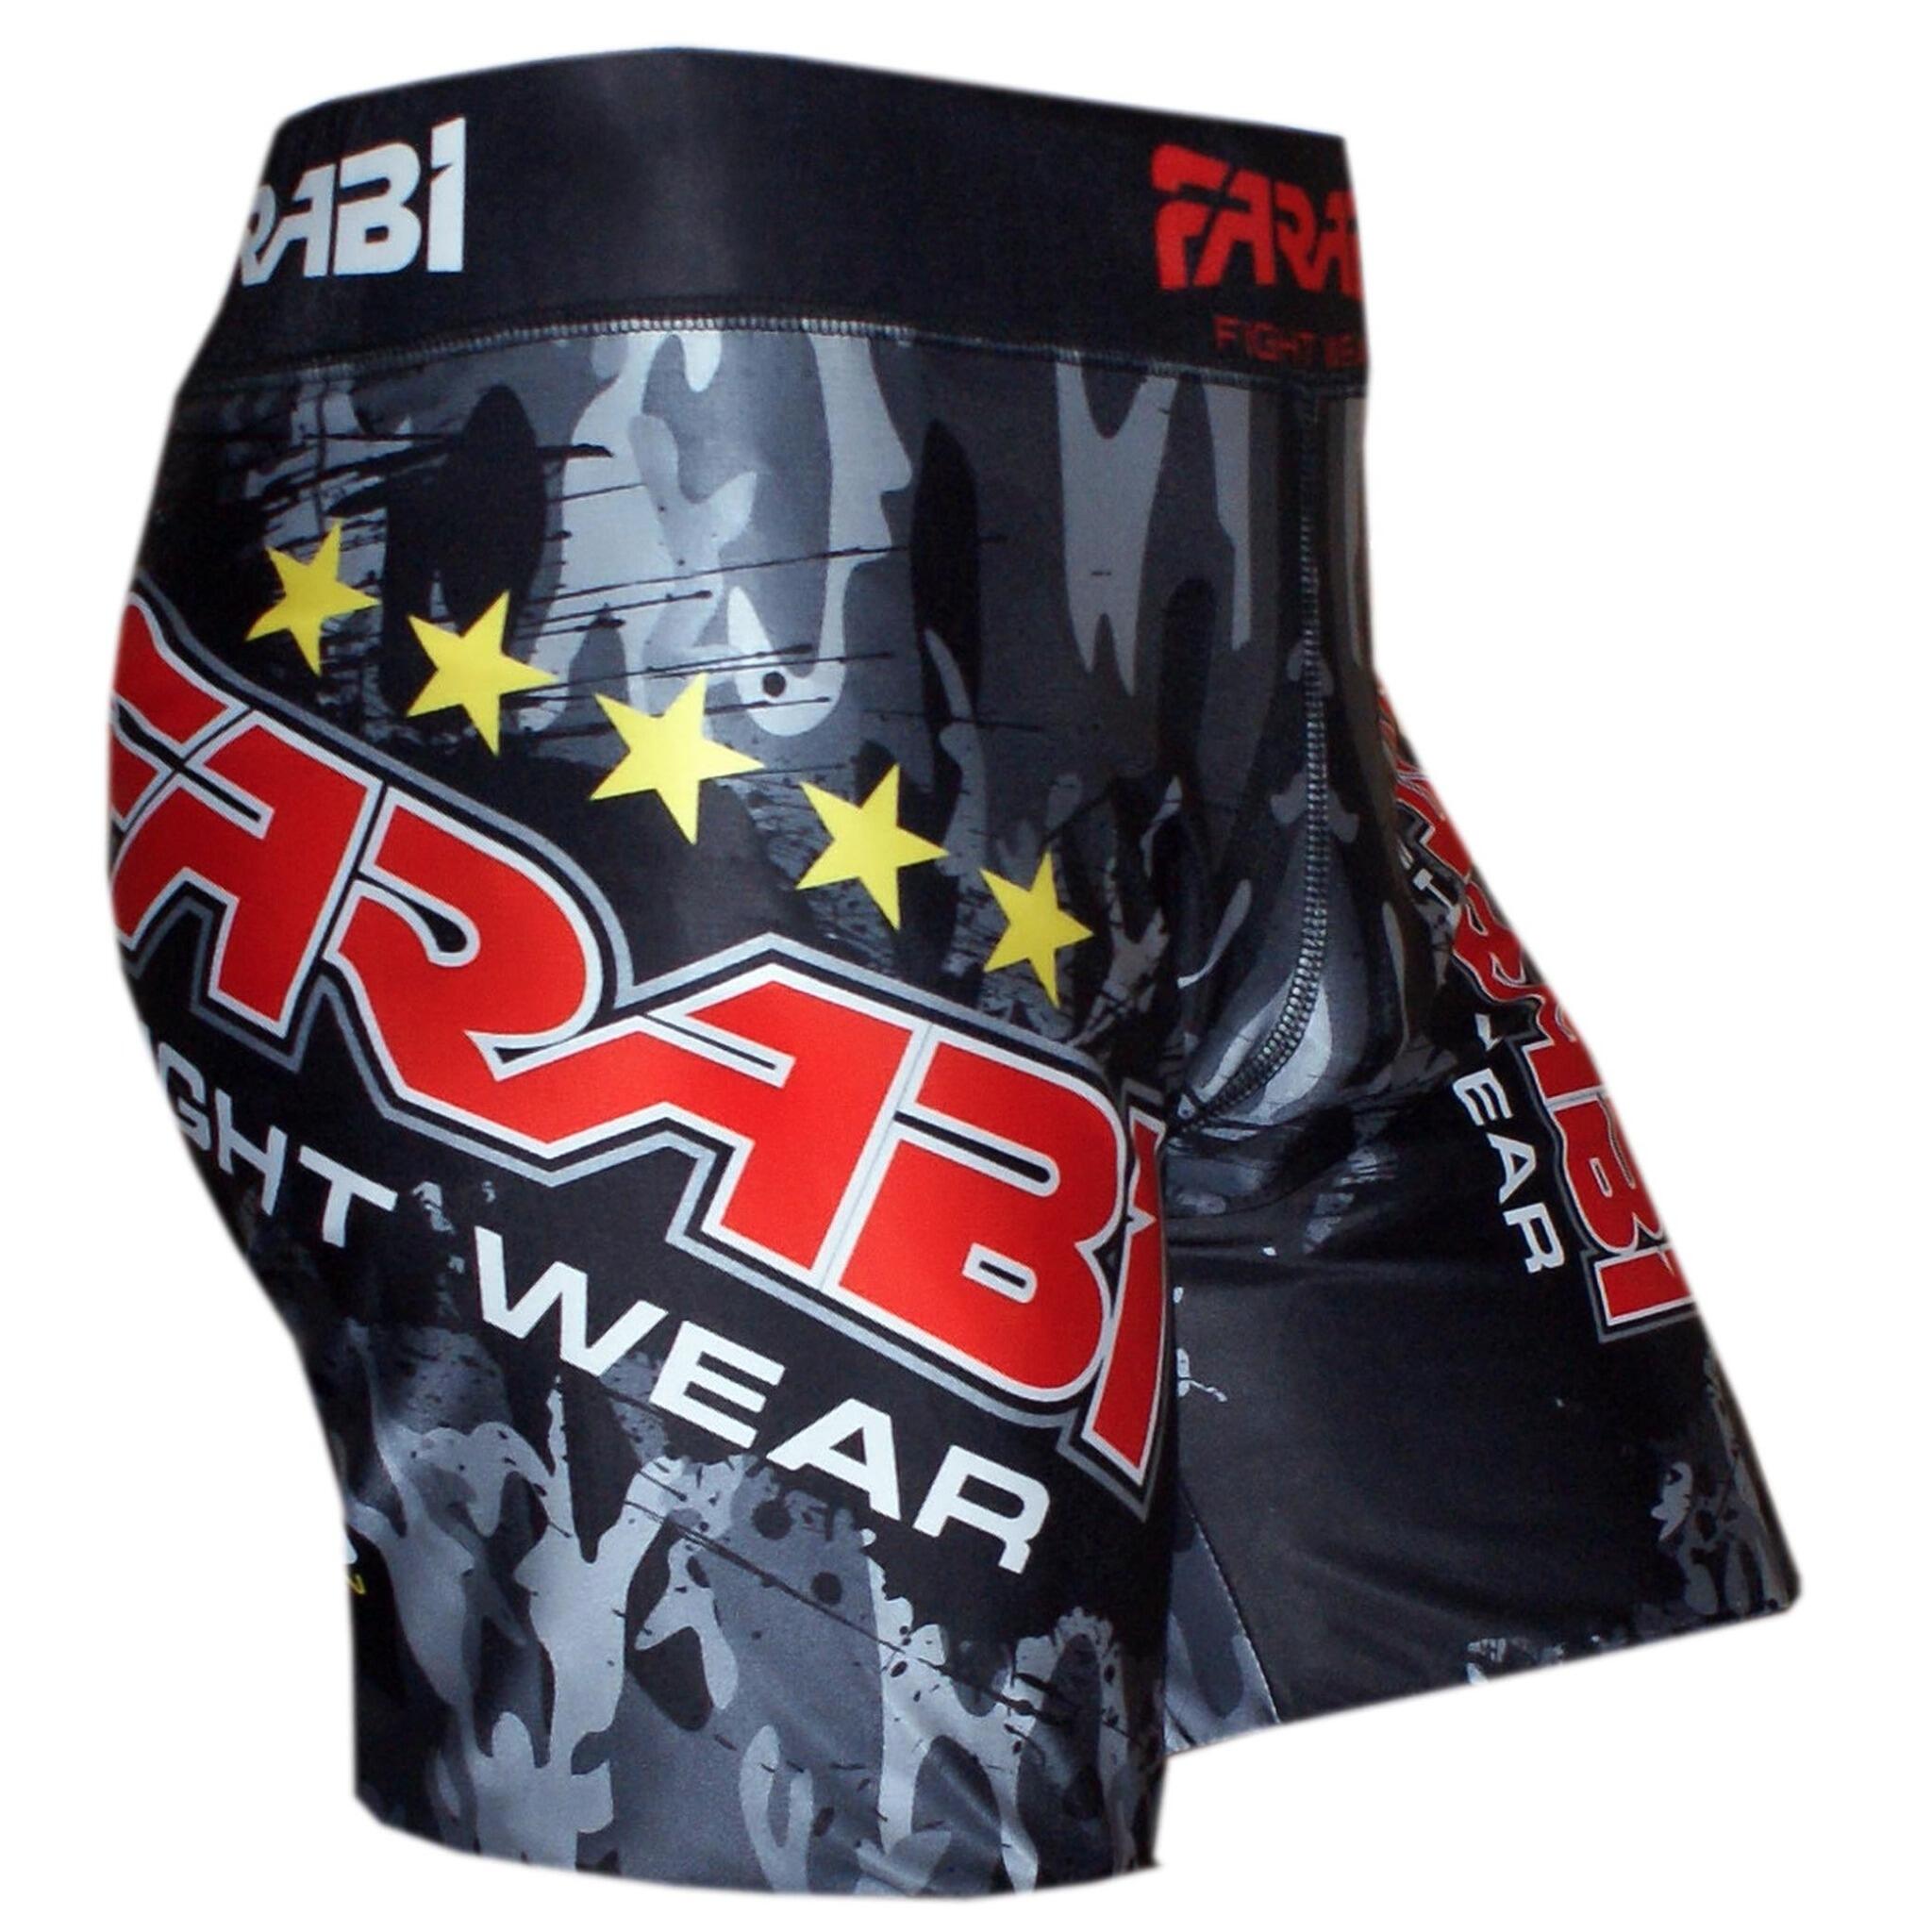 Farabi MMA Boxing Kickboxing Muay Thai Mix Martial Arts Cage Fighting Grappling Training Gym wear Clothing Shorts Trunks